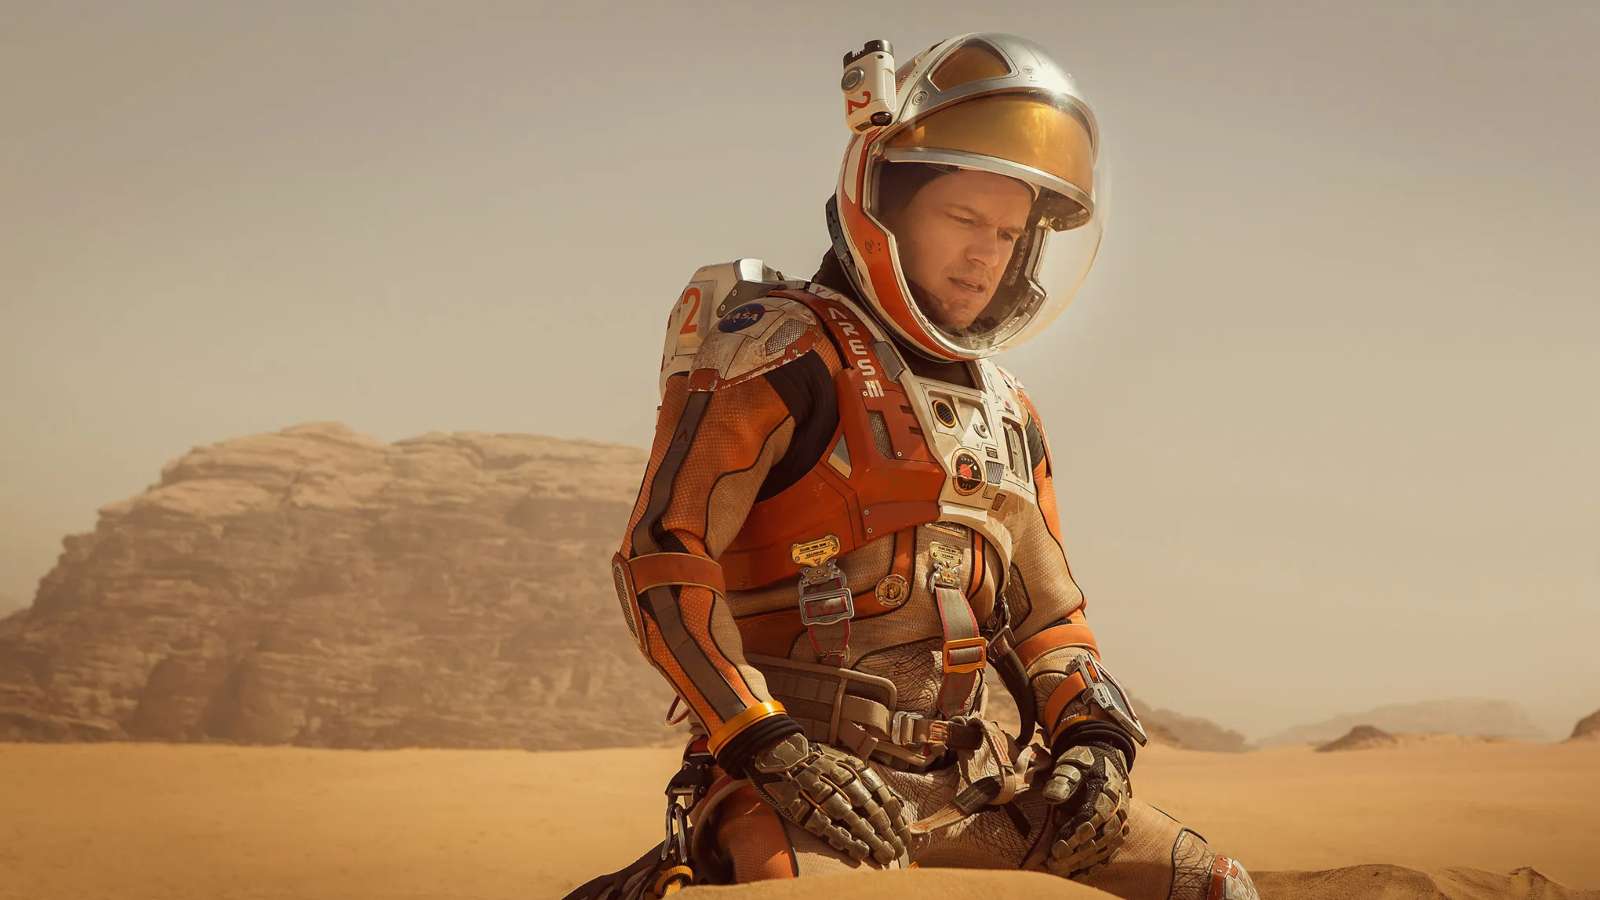 Matt Damon in The Martian as Mark.